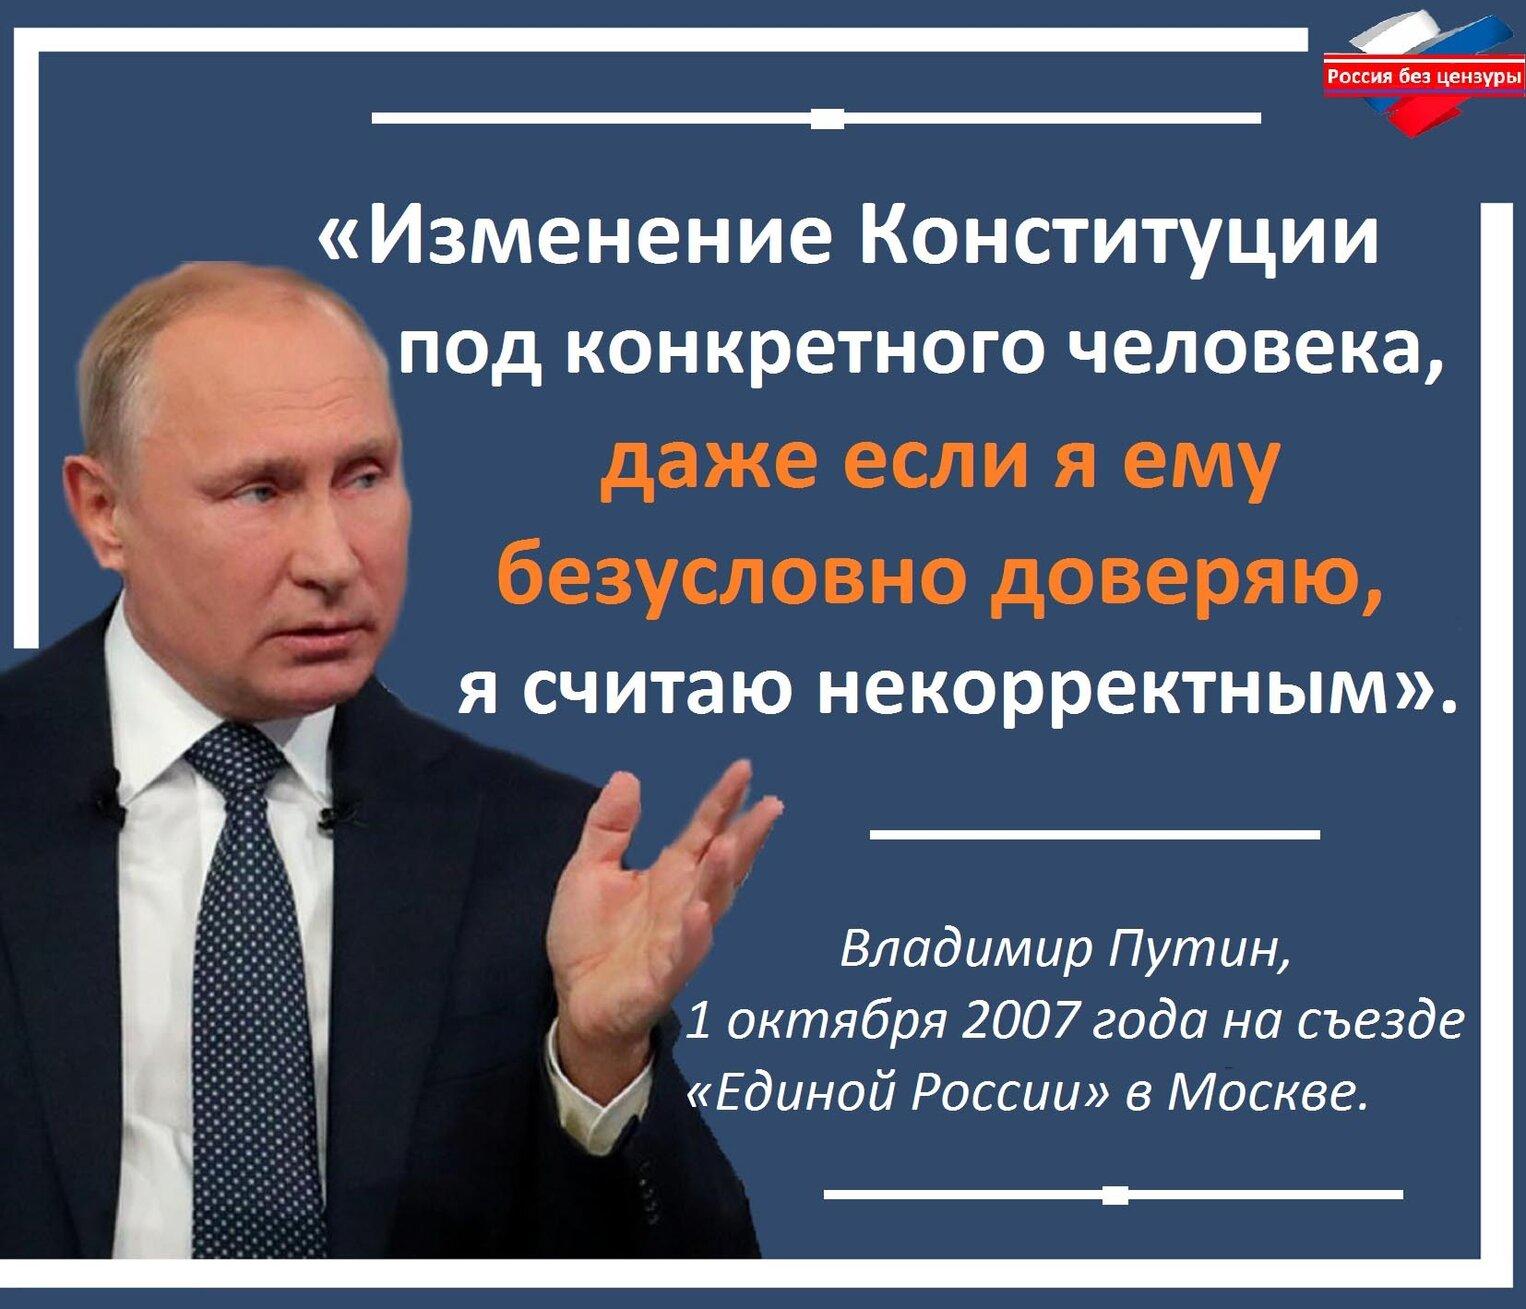 Про изменения конституции. Цитата Путина про Конституцию. Законы против народа.